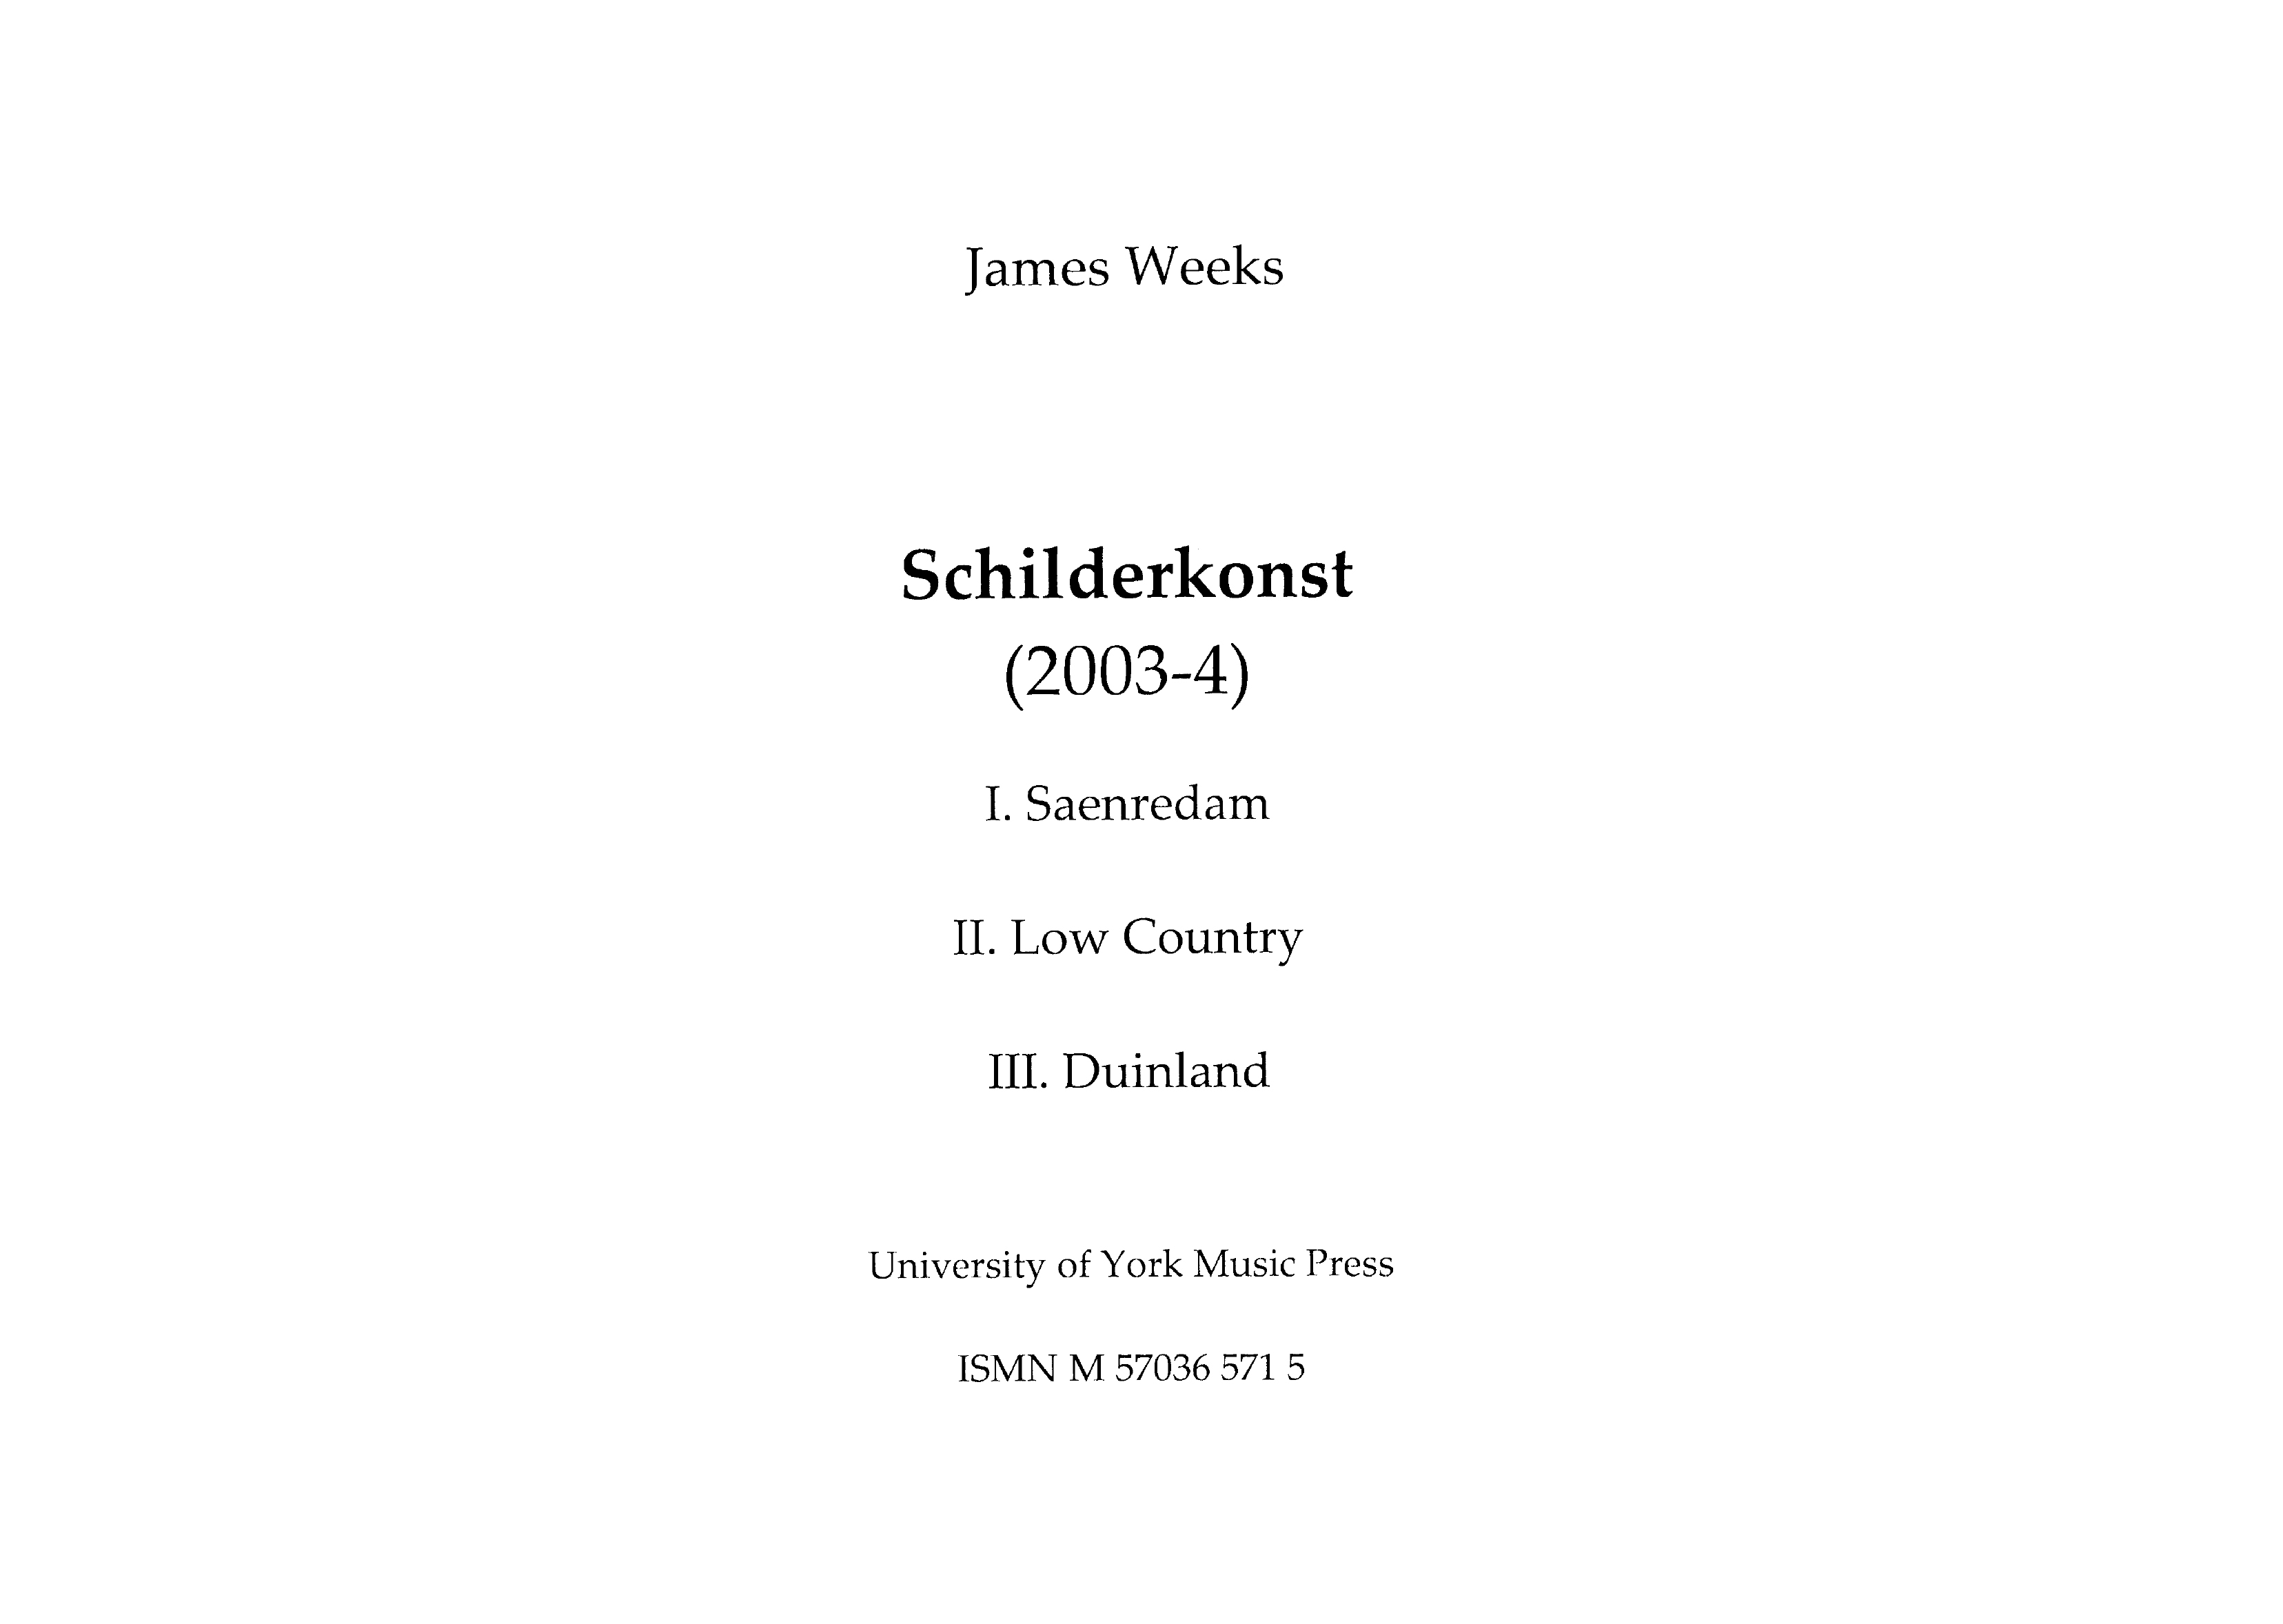 James Weeks: Schilderkonst: Chamber Ensemble: Study Score